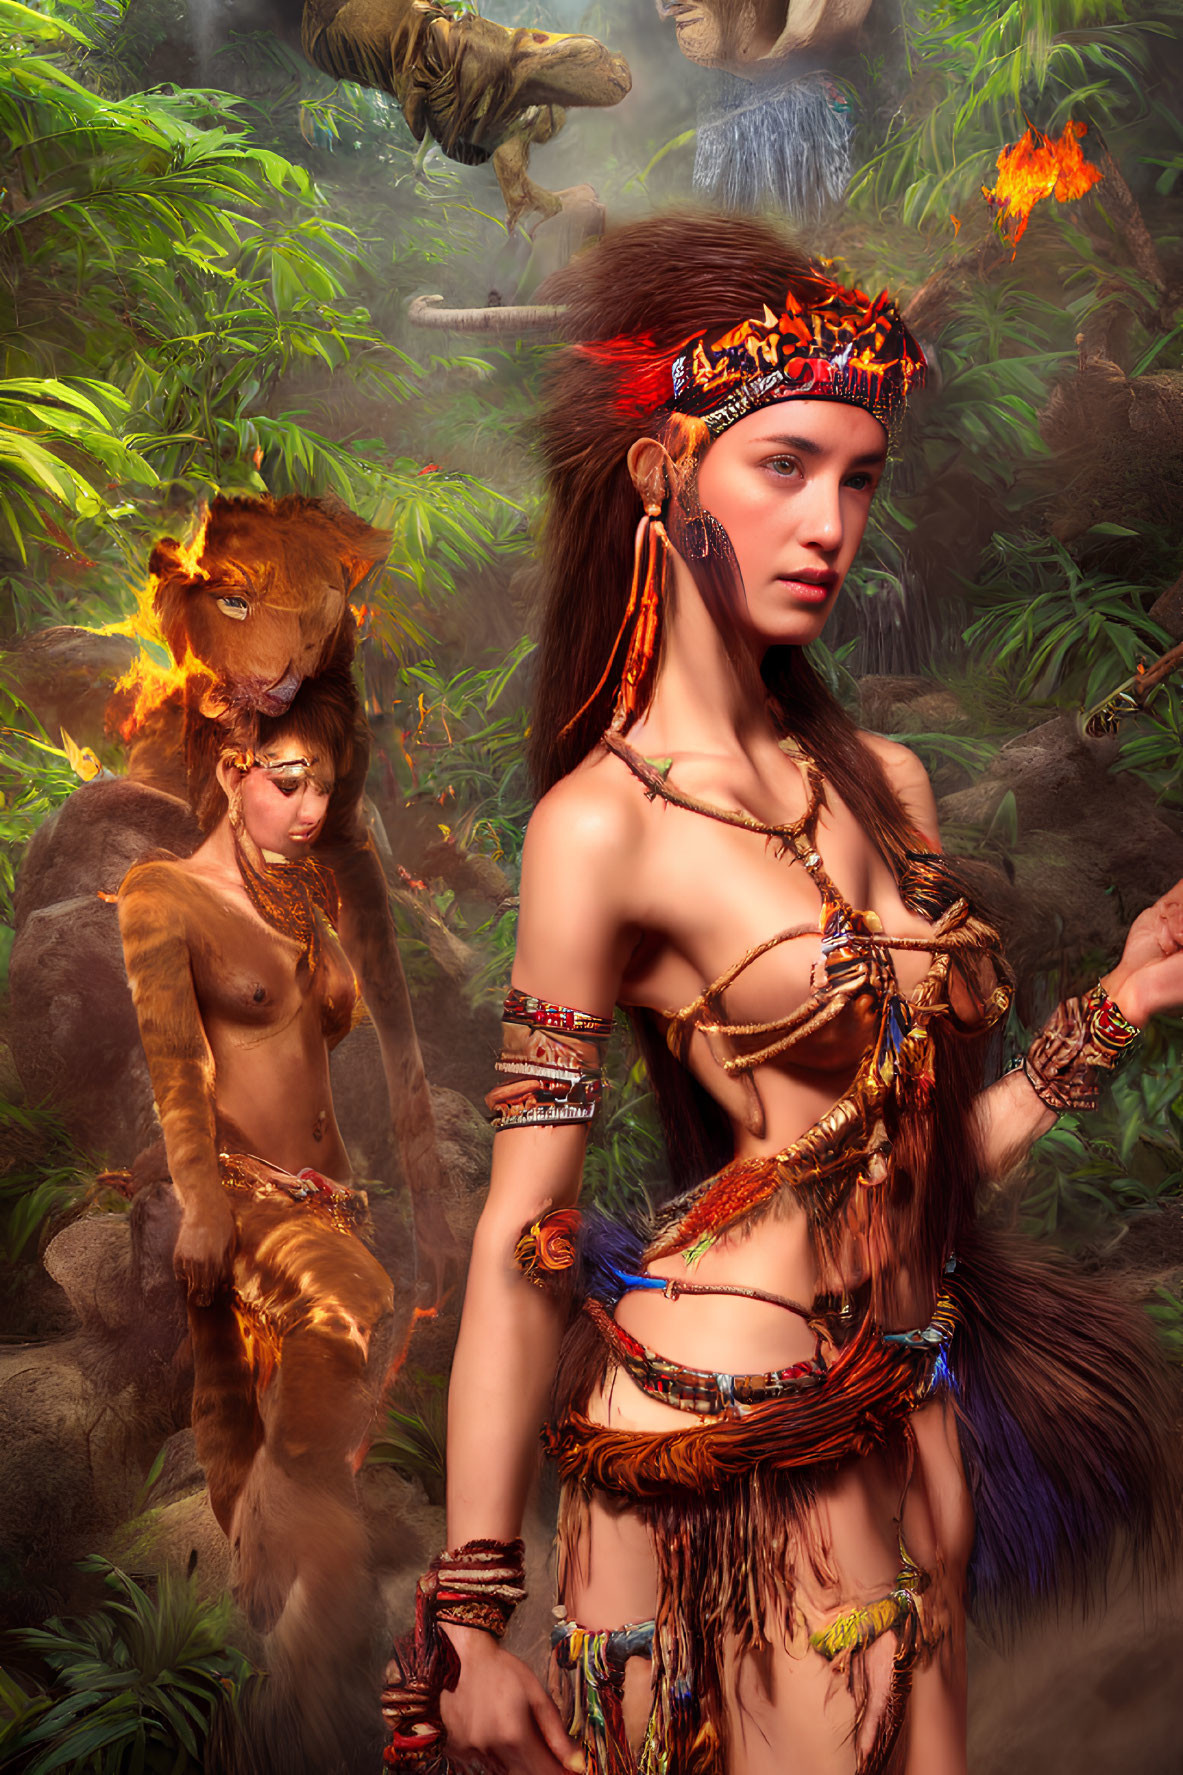 Two women in tribal attire with a tiger in a lush jungle - vibrant colors create mystical scene